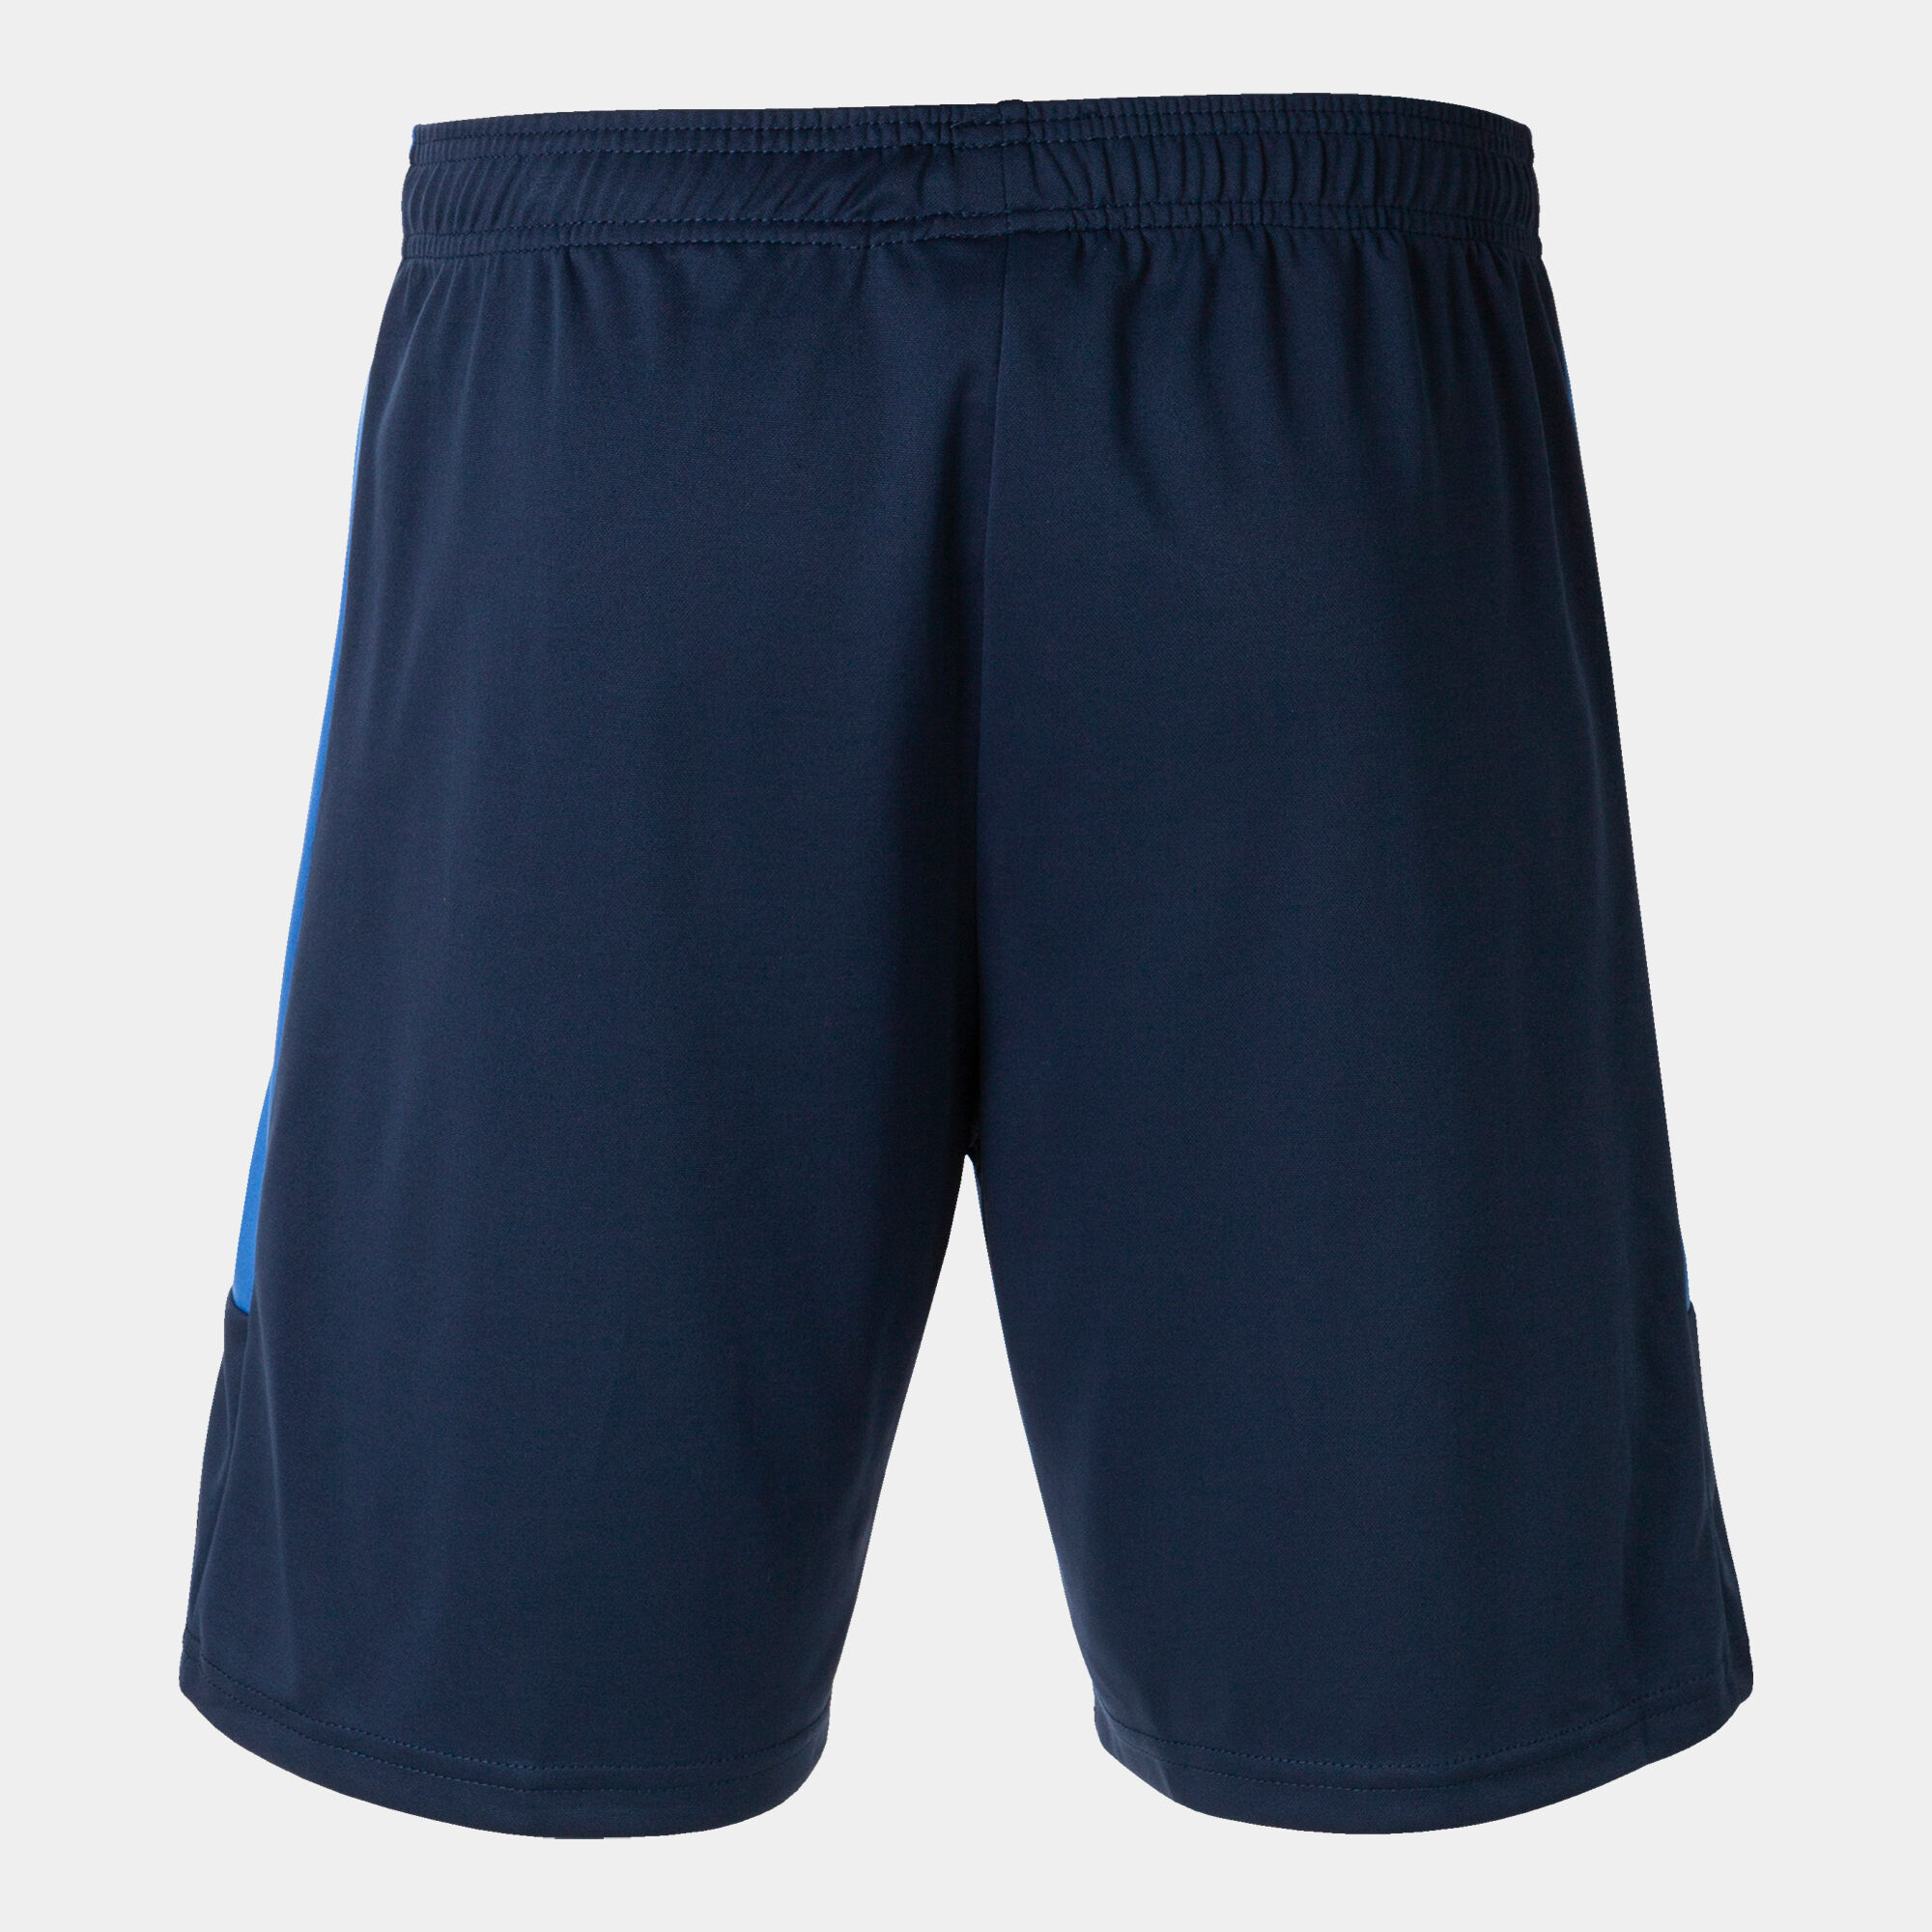 Pantalón corto Joma Classic Bermuda. Navy-red. 101655.336. por 12,75 €